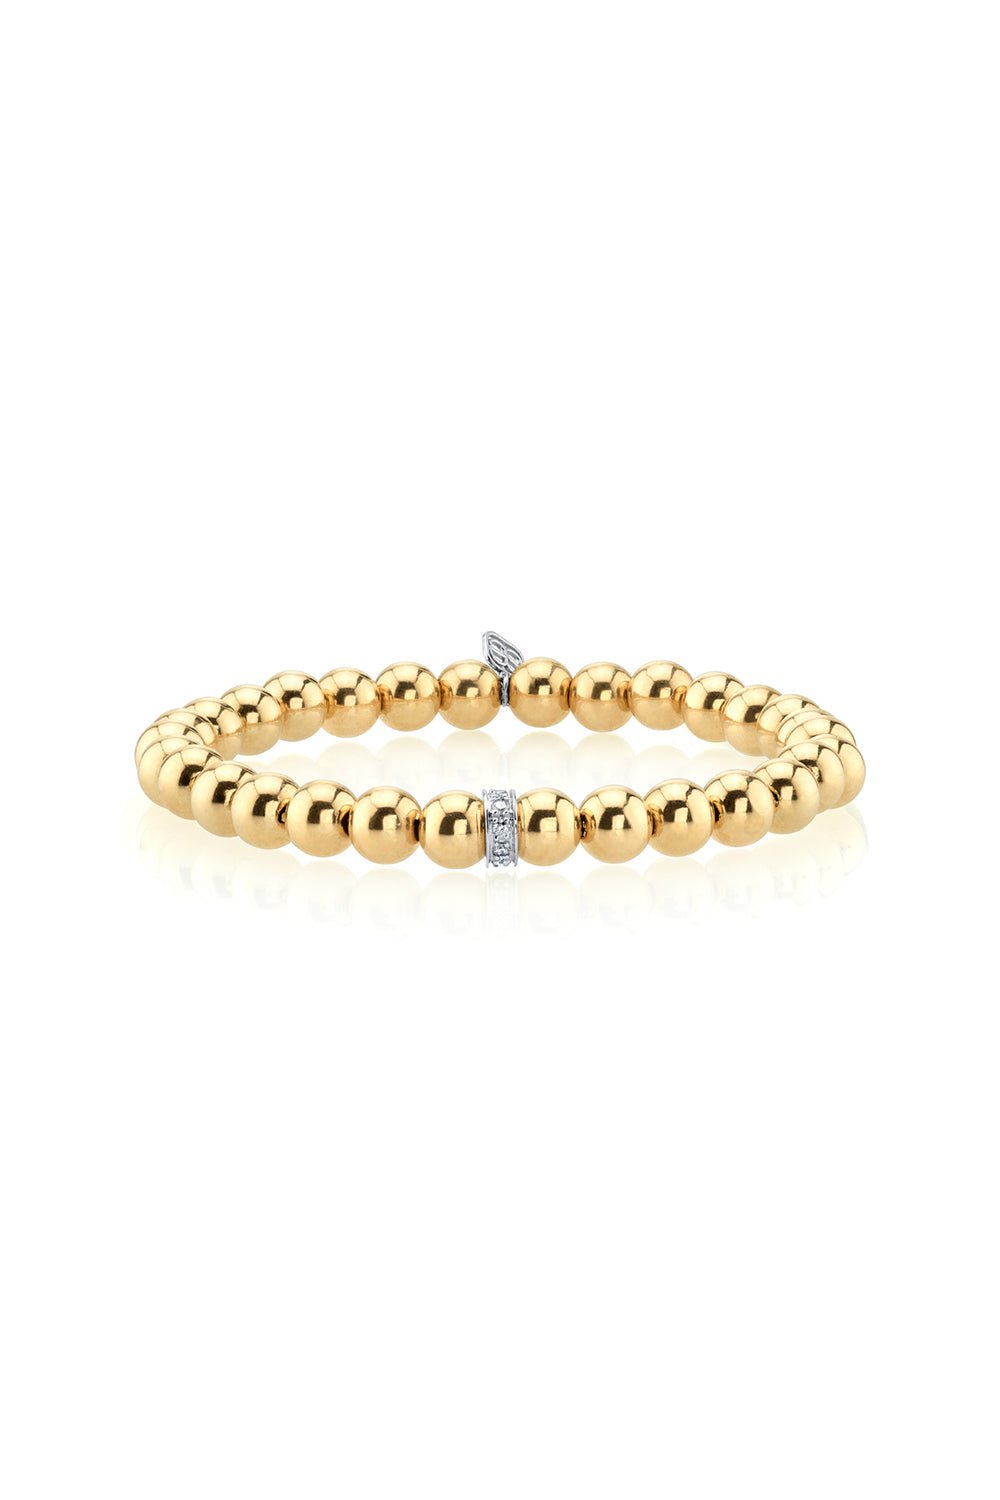 SYDNEY EVAN-Wheel Gold Bead Bracelet-YELLOW GOLD